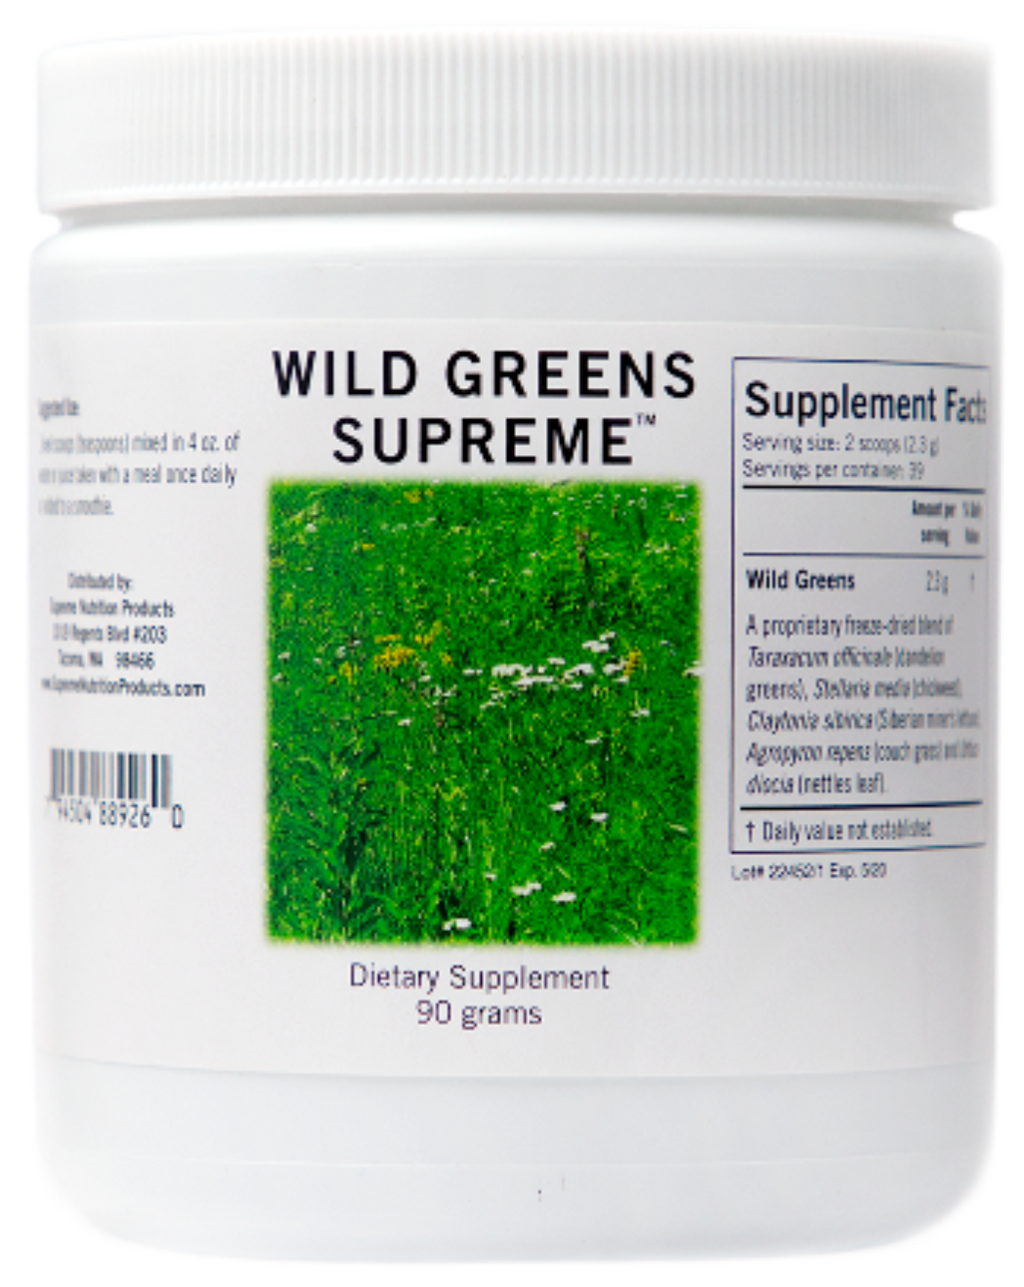 Wild Greens Supreme - Ipothecary